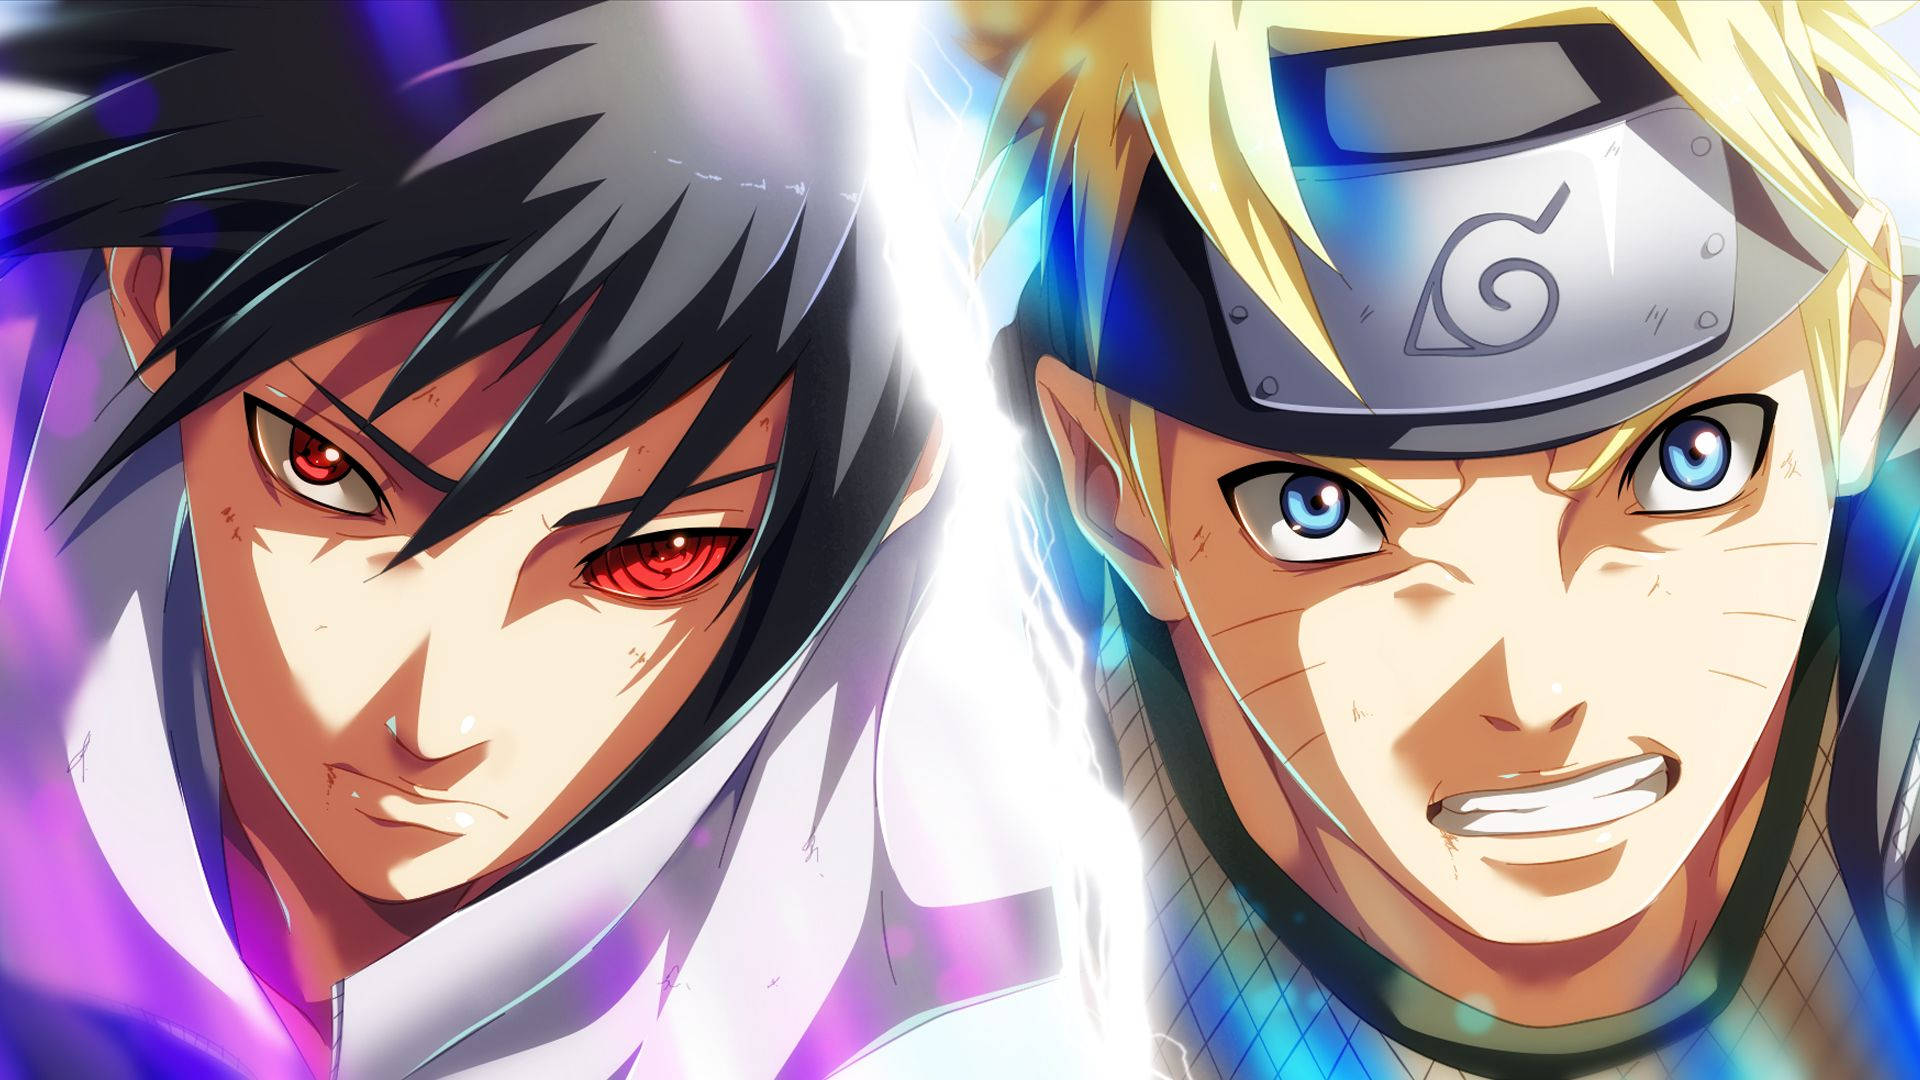 Anime Naruto And Sasuke With Sharingan Eye Picture